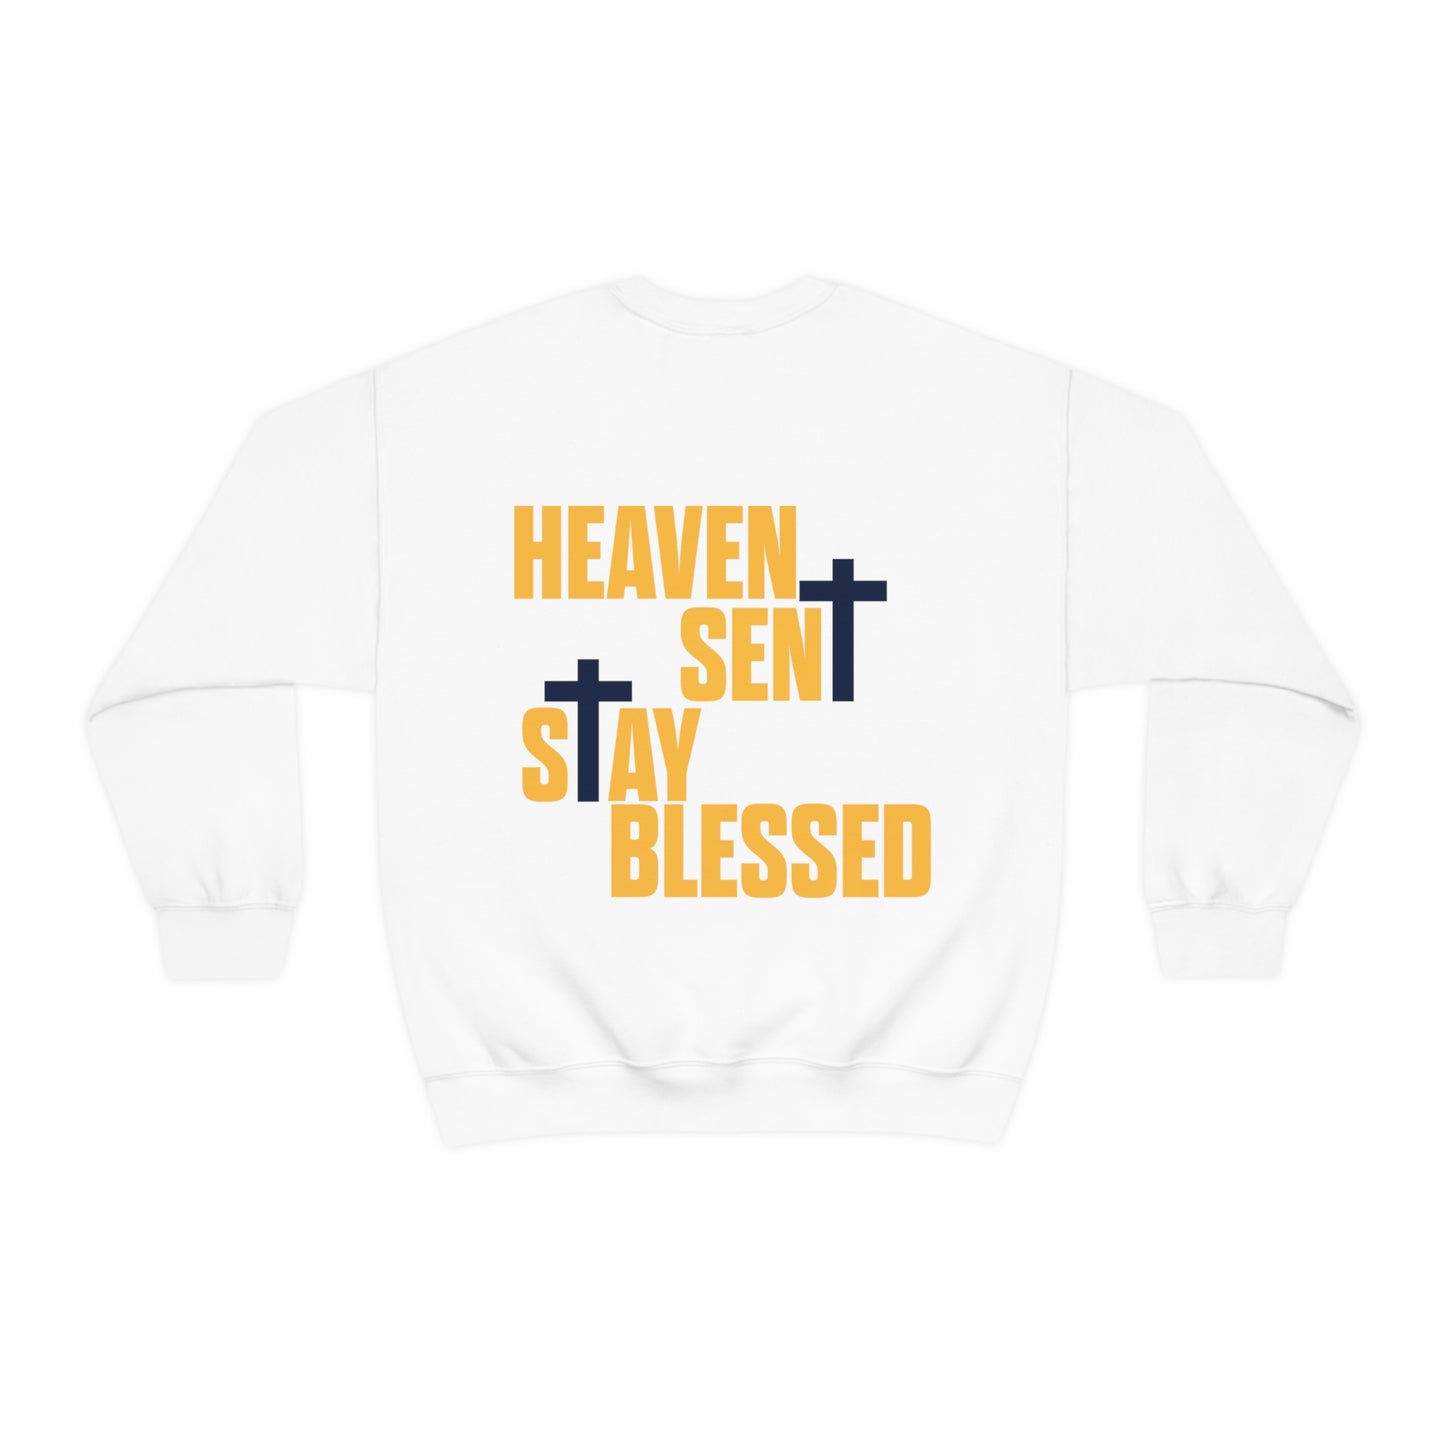 Keonté Kennedy: Heaven Sent Stay Blessed Crewneck